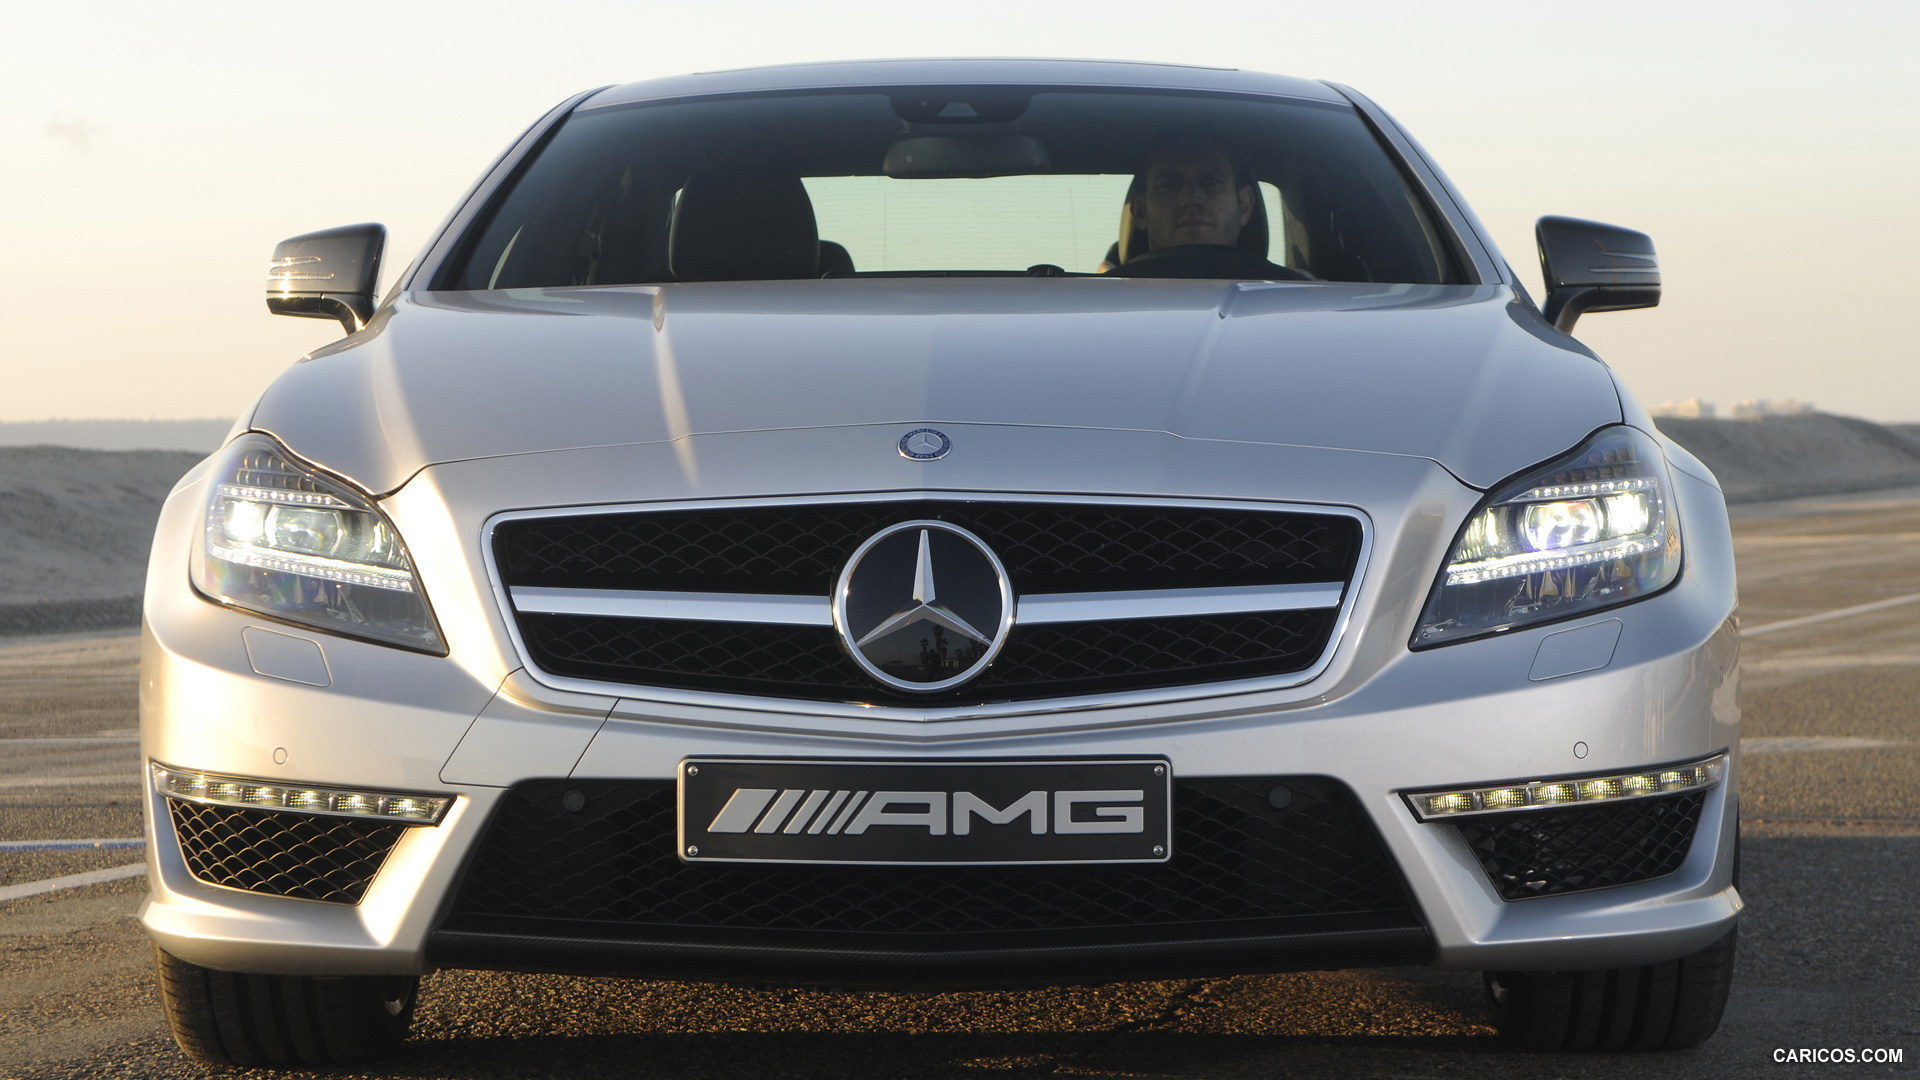 Mercedes-Benz CLS63 AMG (2012) US-Version - Iridium Silver - Front , #60 of 100